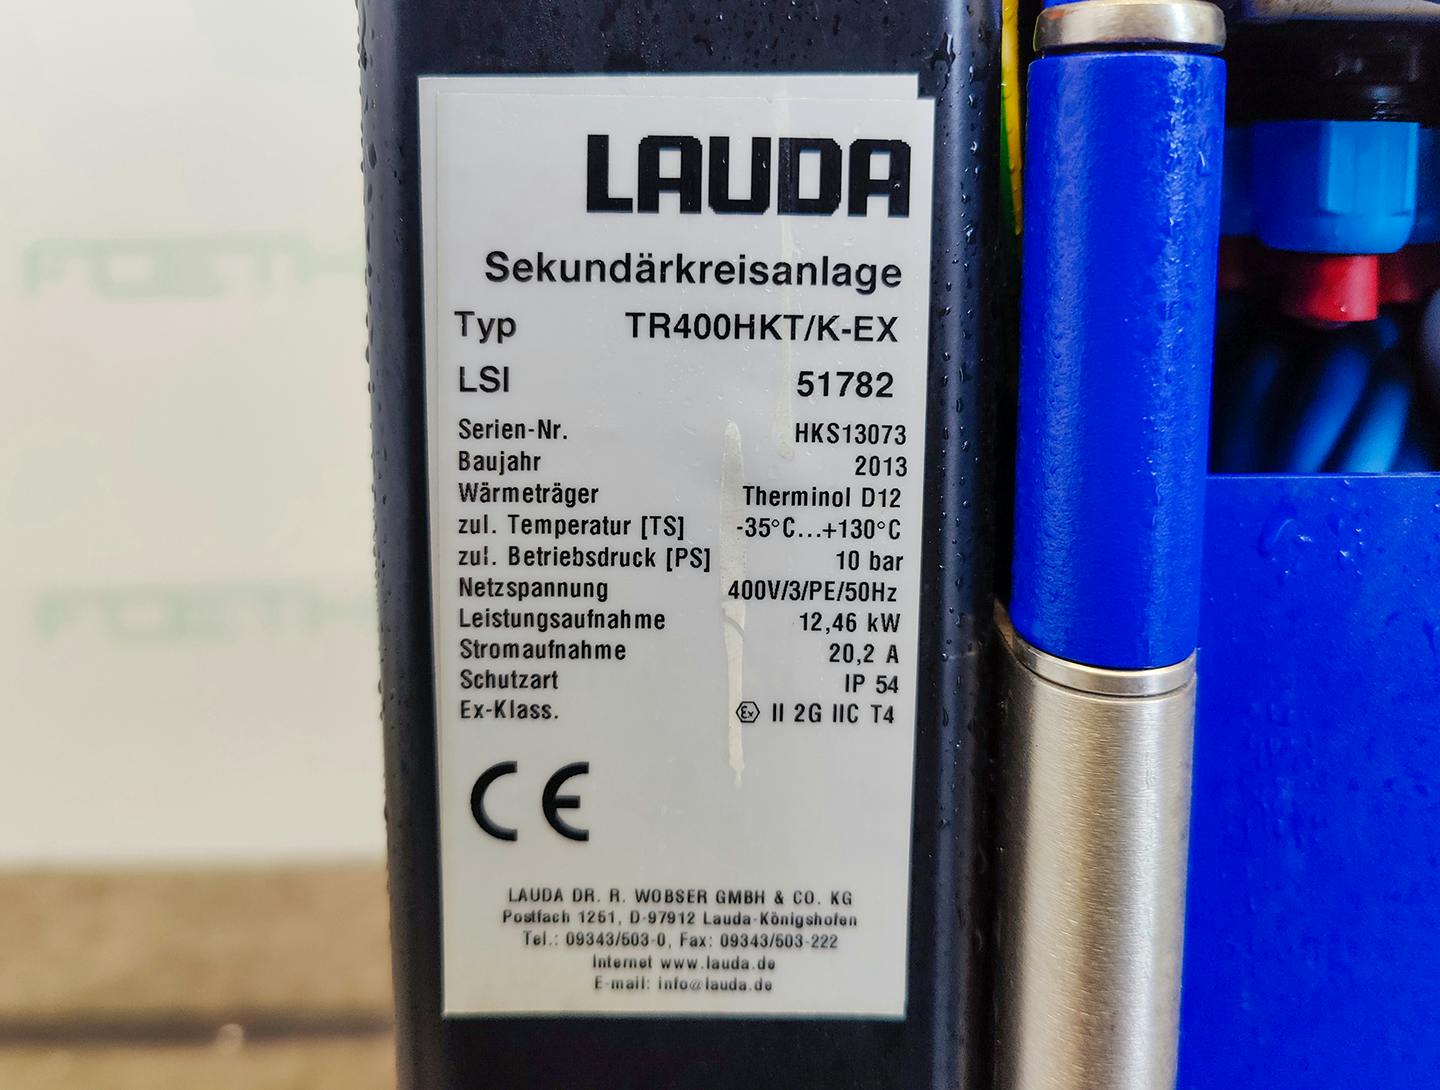 Lauda TR400 HKT/K-EX "secondary circuit system" - Thermorégulateur - image 6